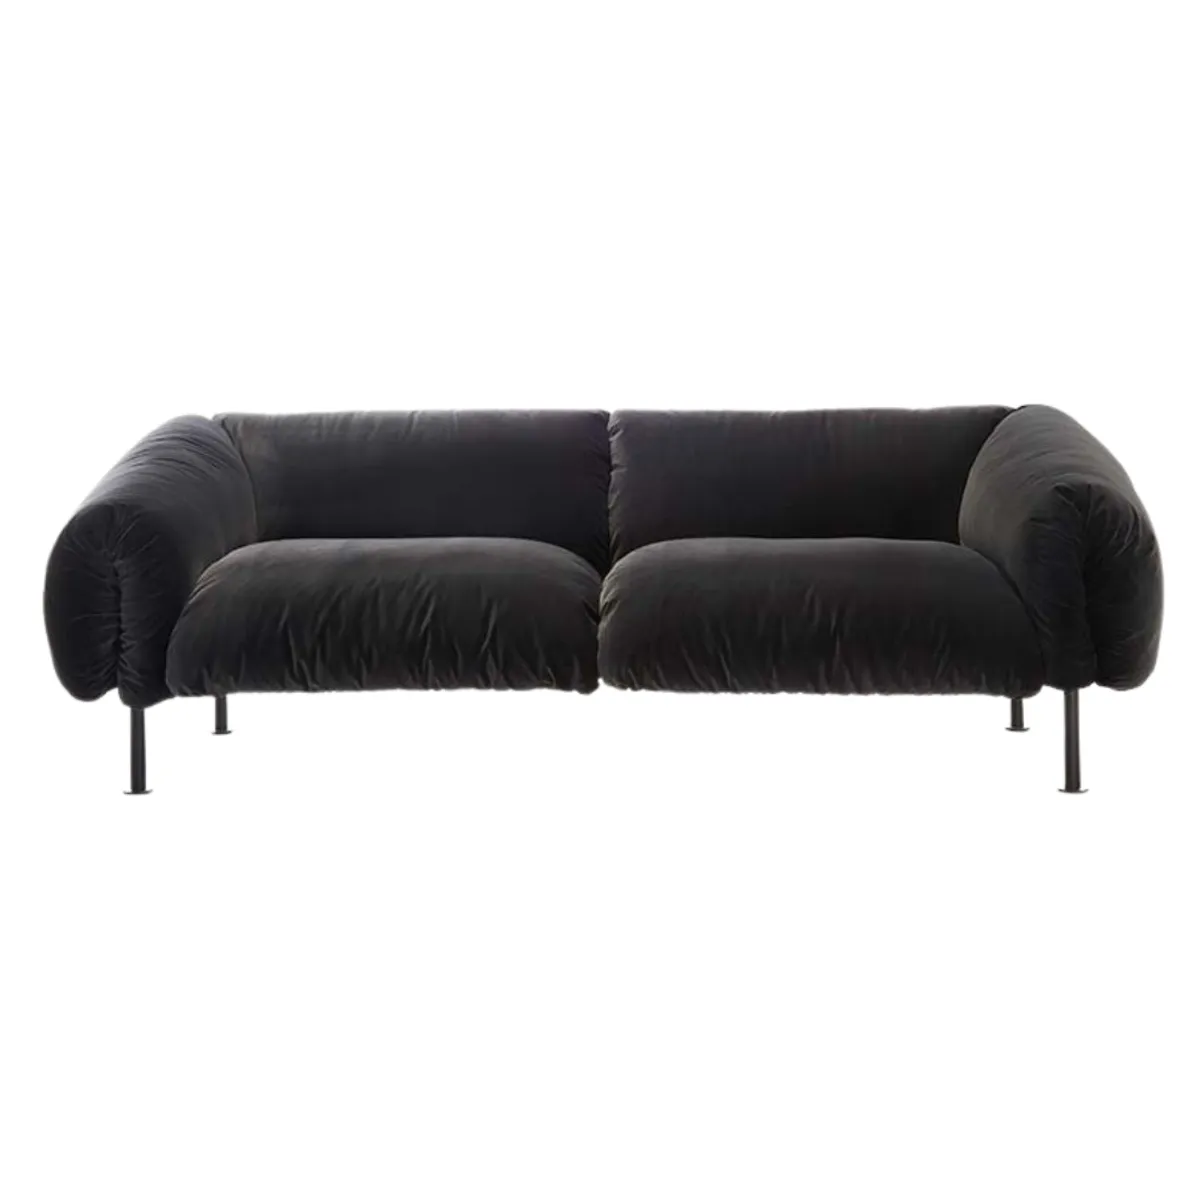 Albion sofa 3